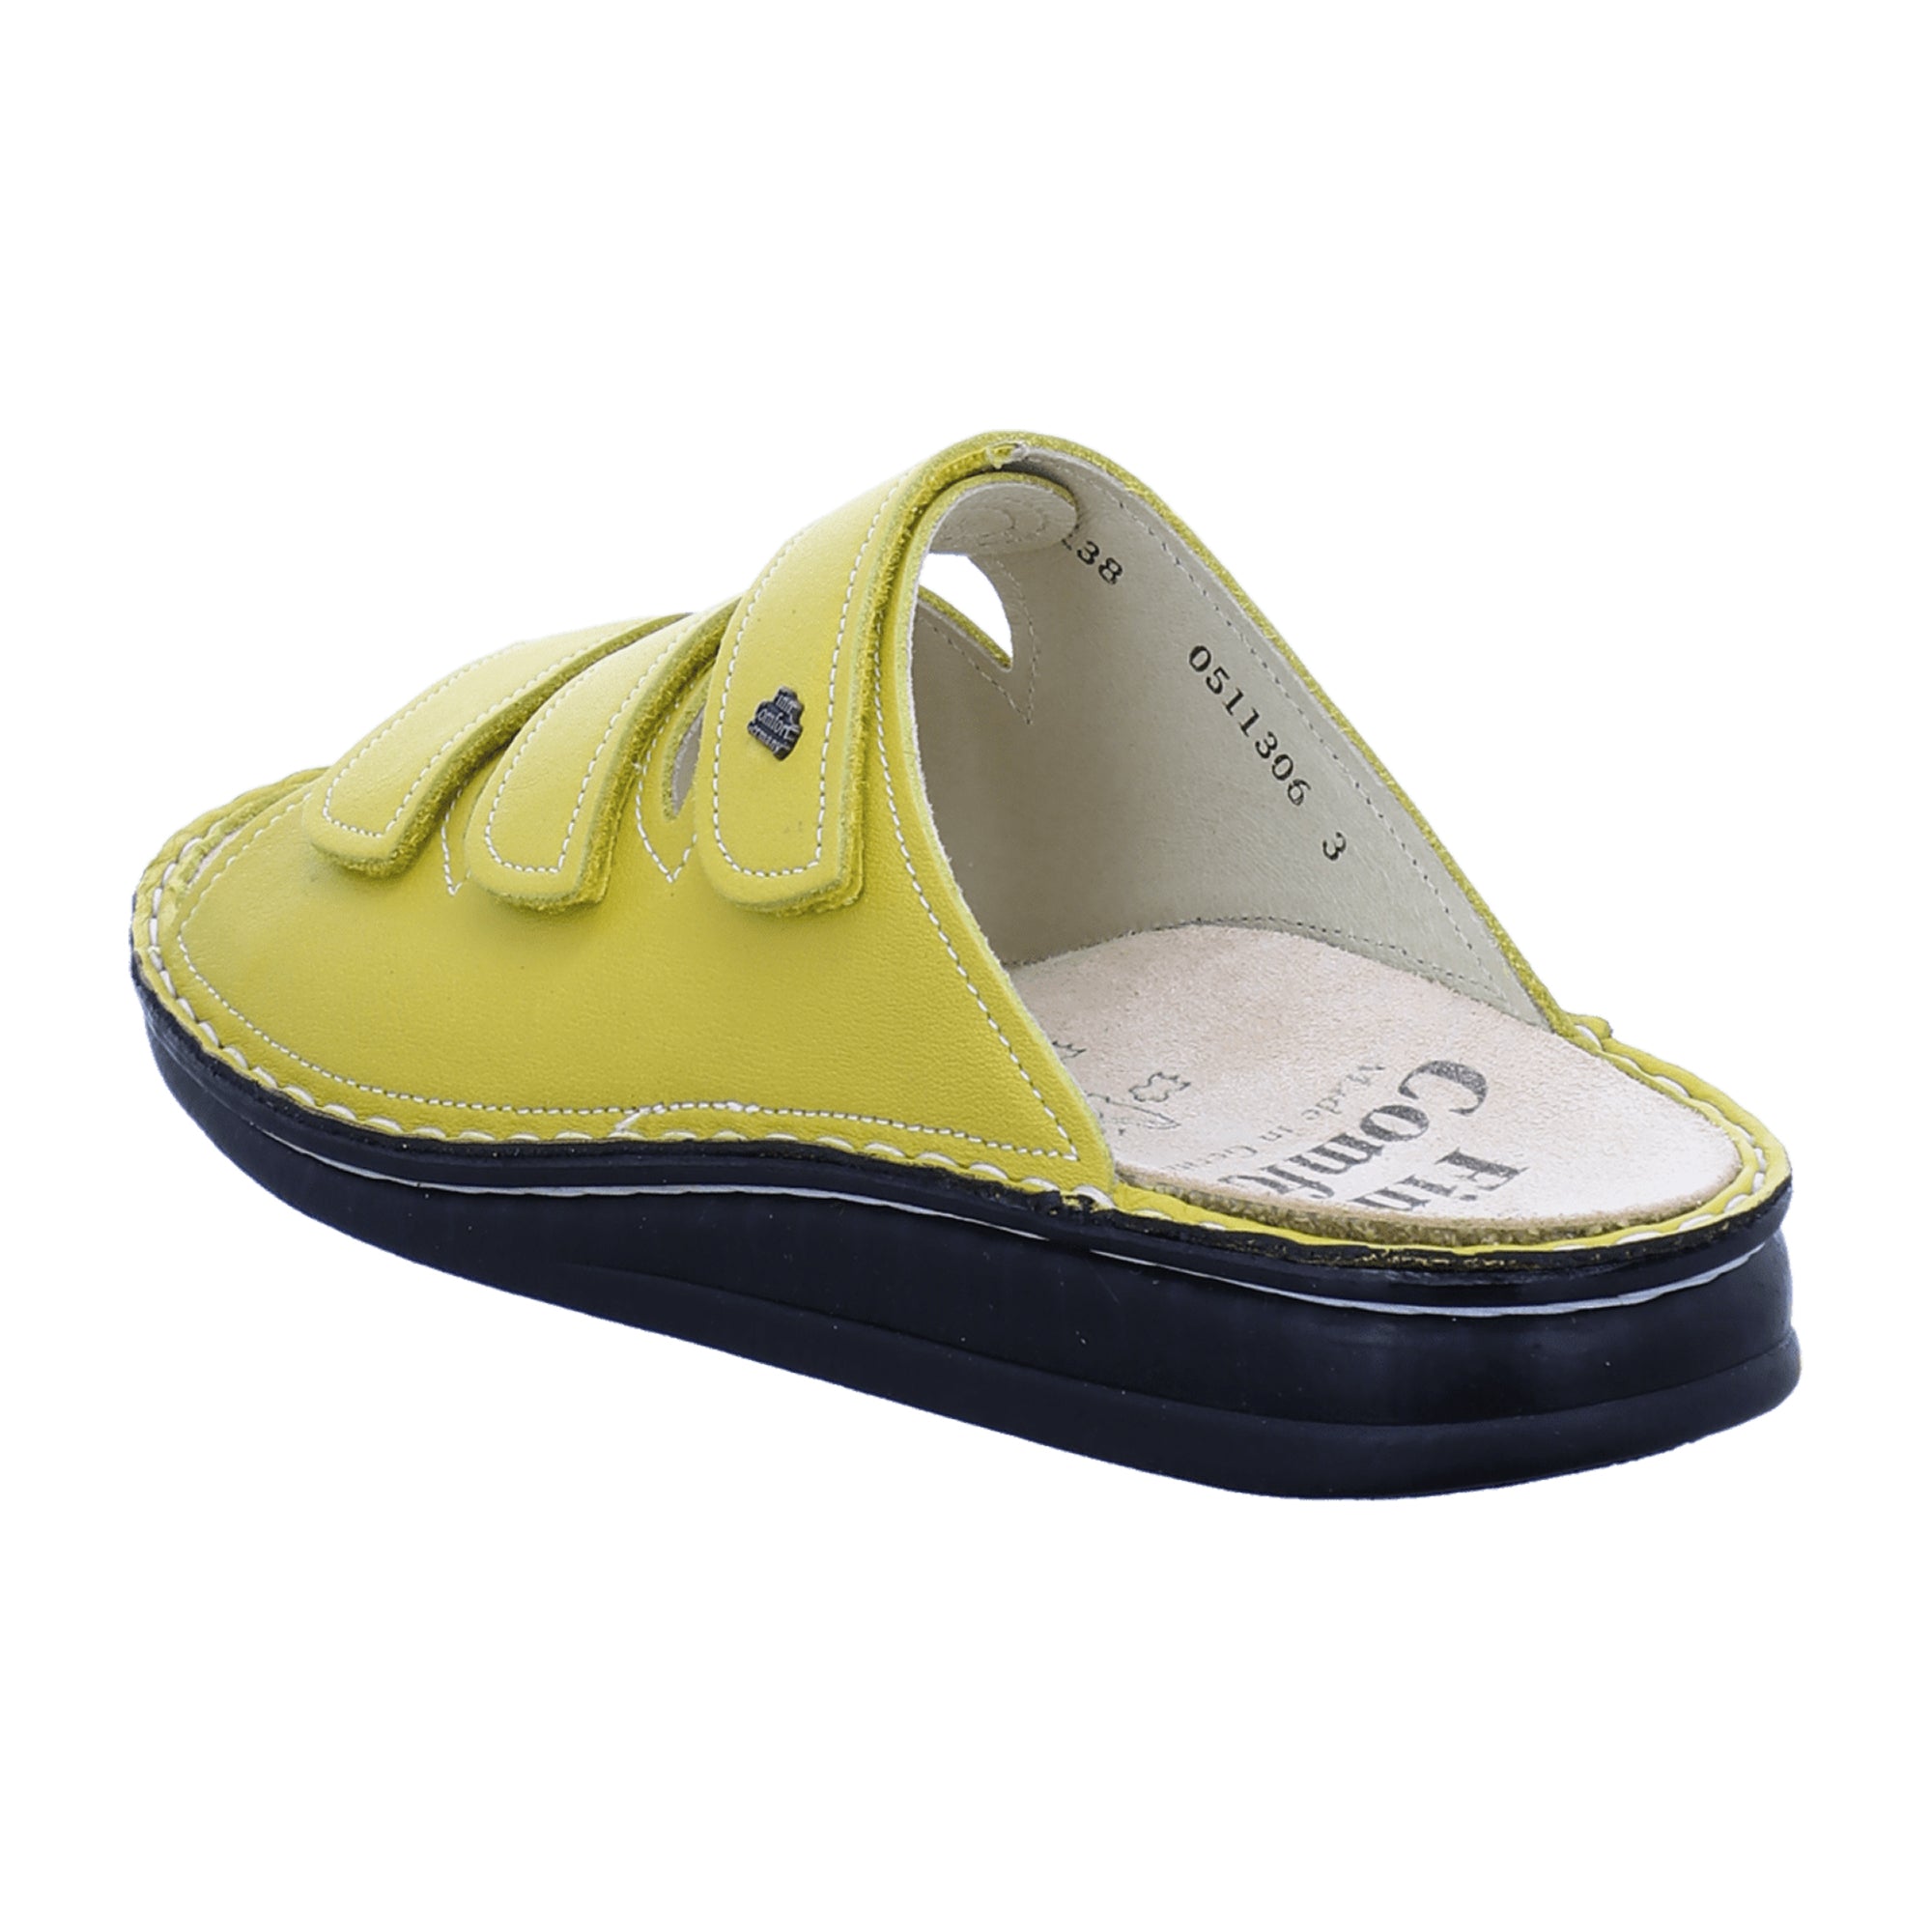 Finn Comfort Korfu Women's Yellow Sandals - Stylish & Comfortable